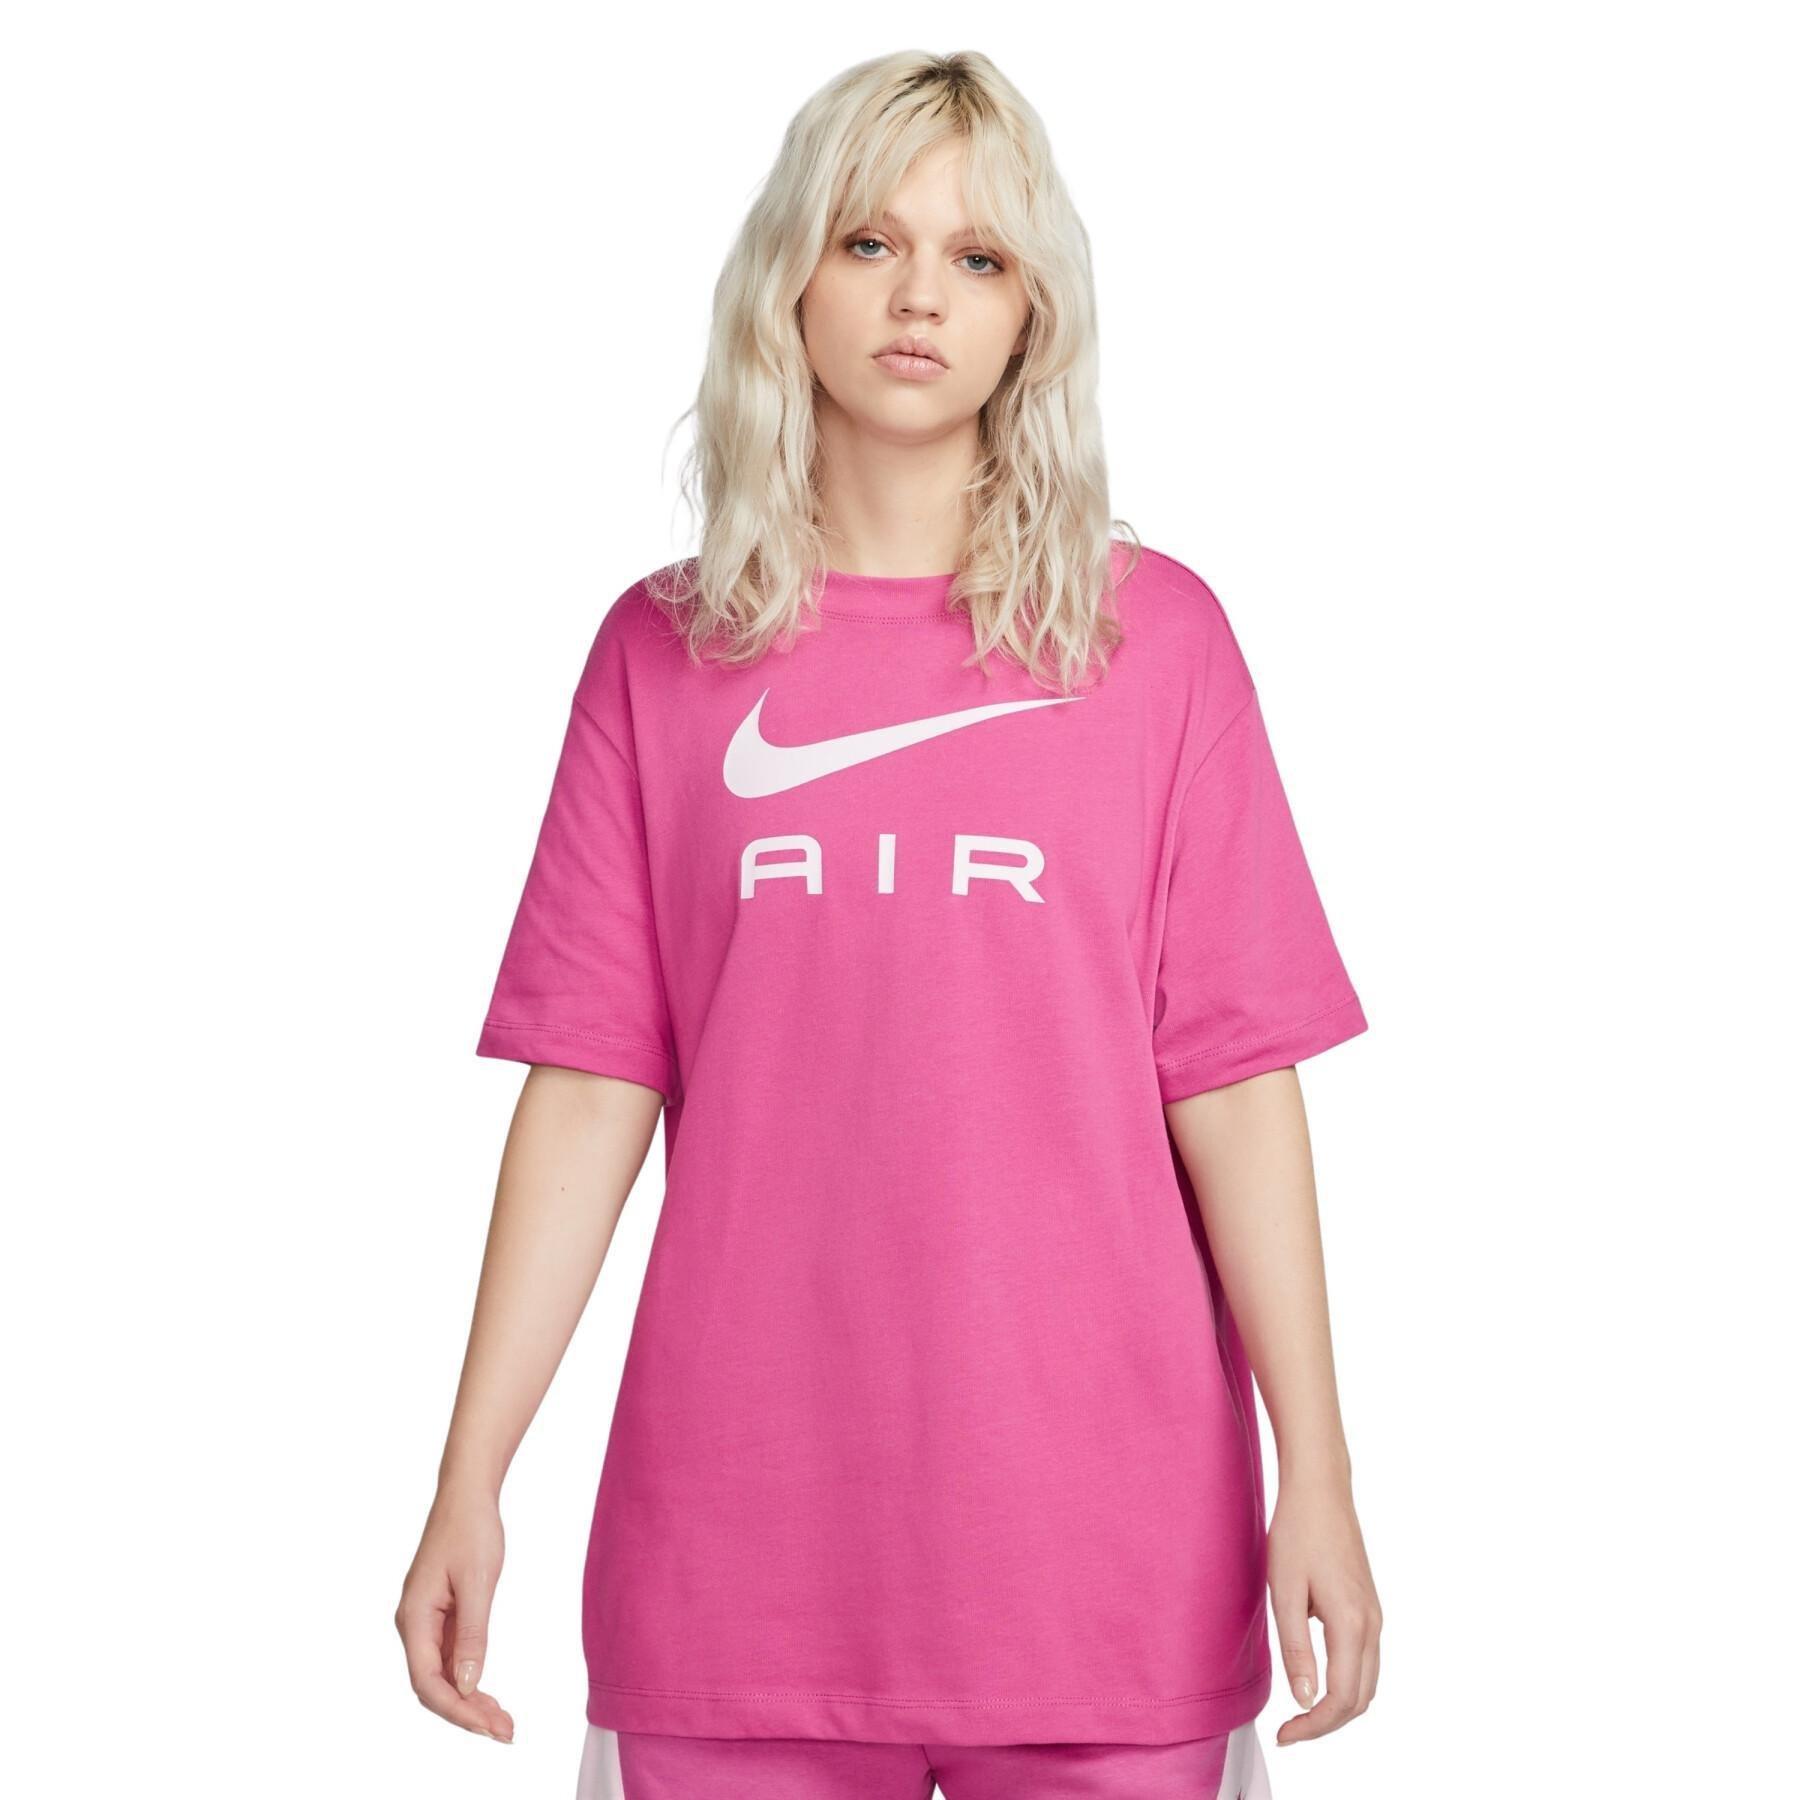 Nike Air T-Shirt Women - Pink